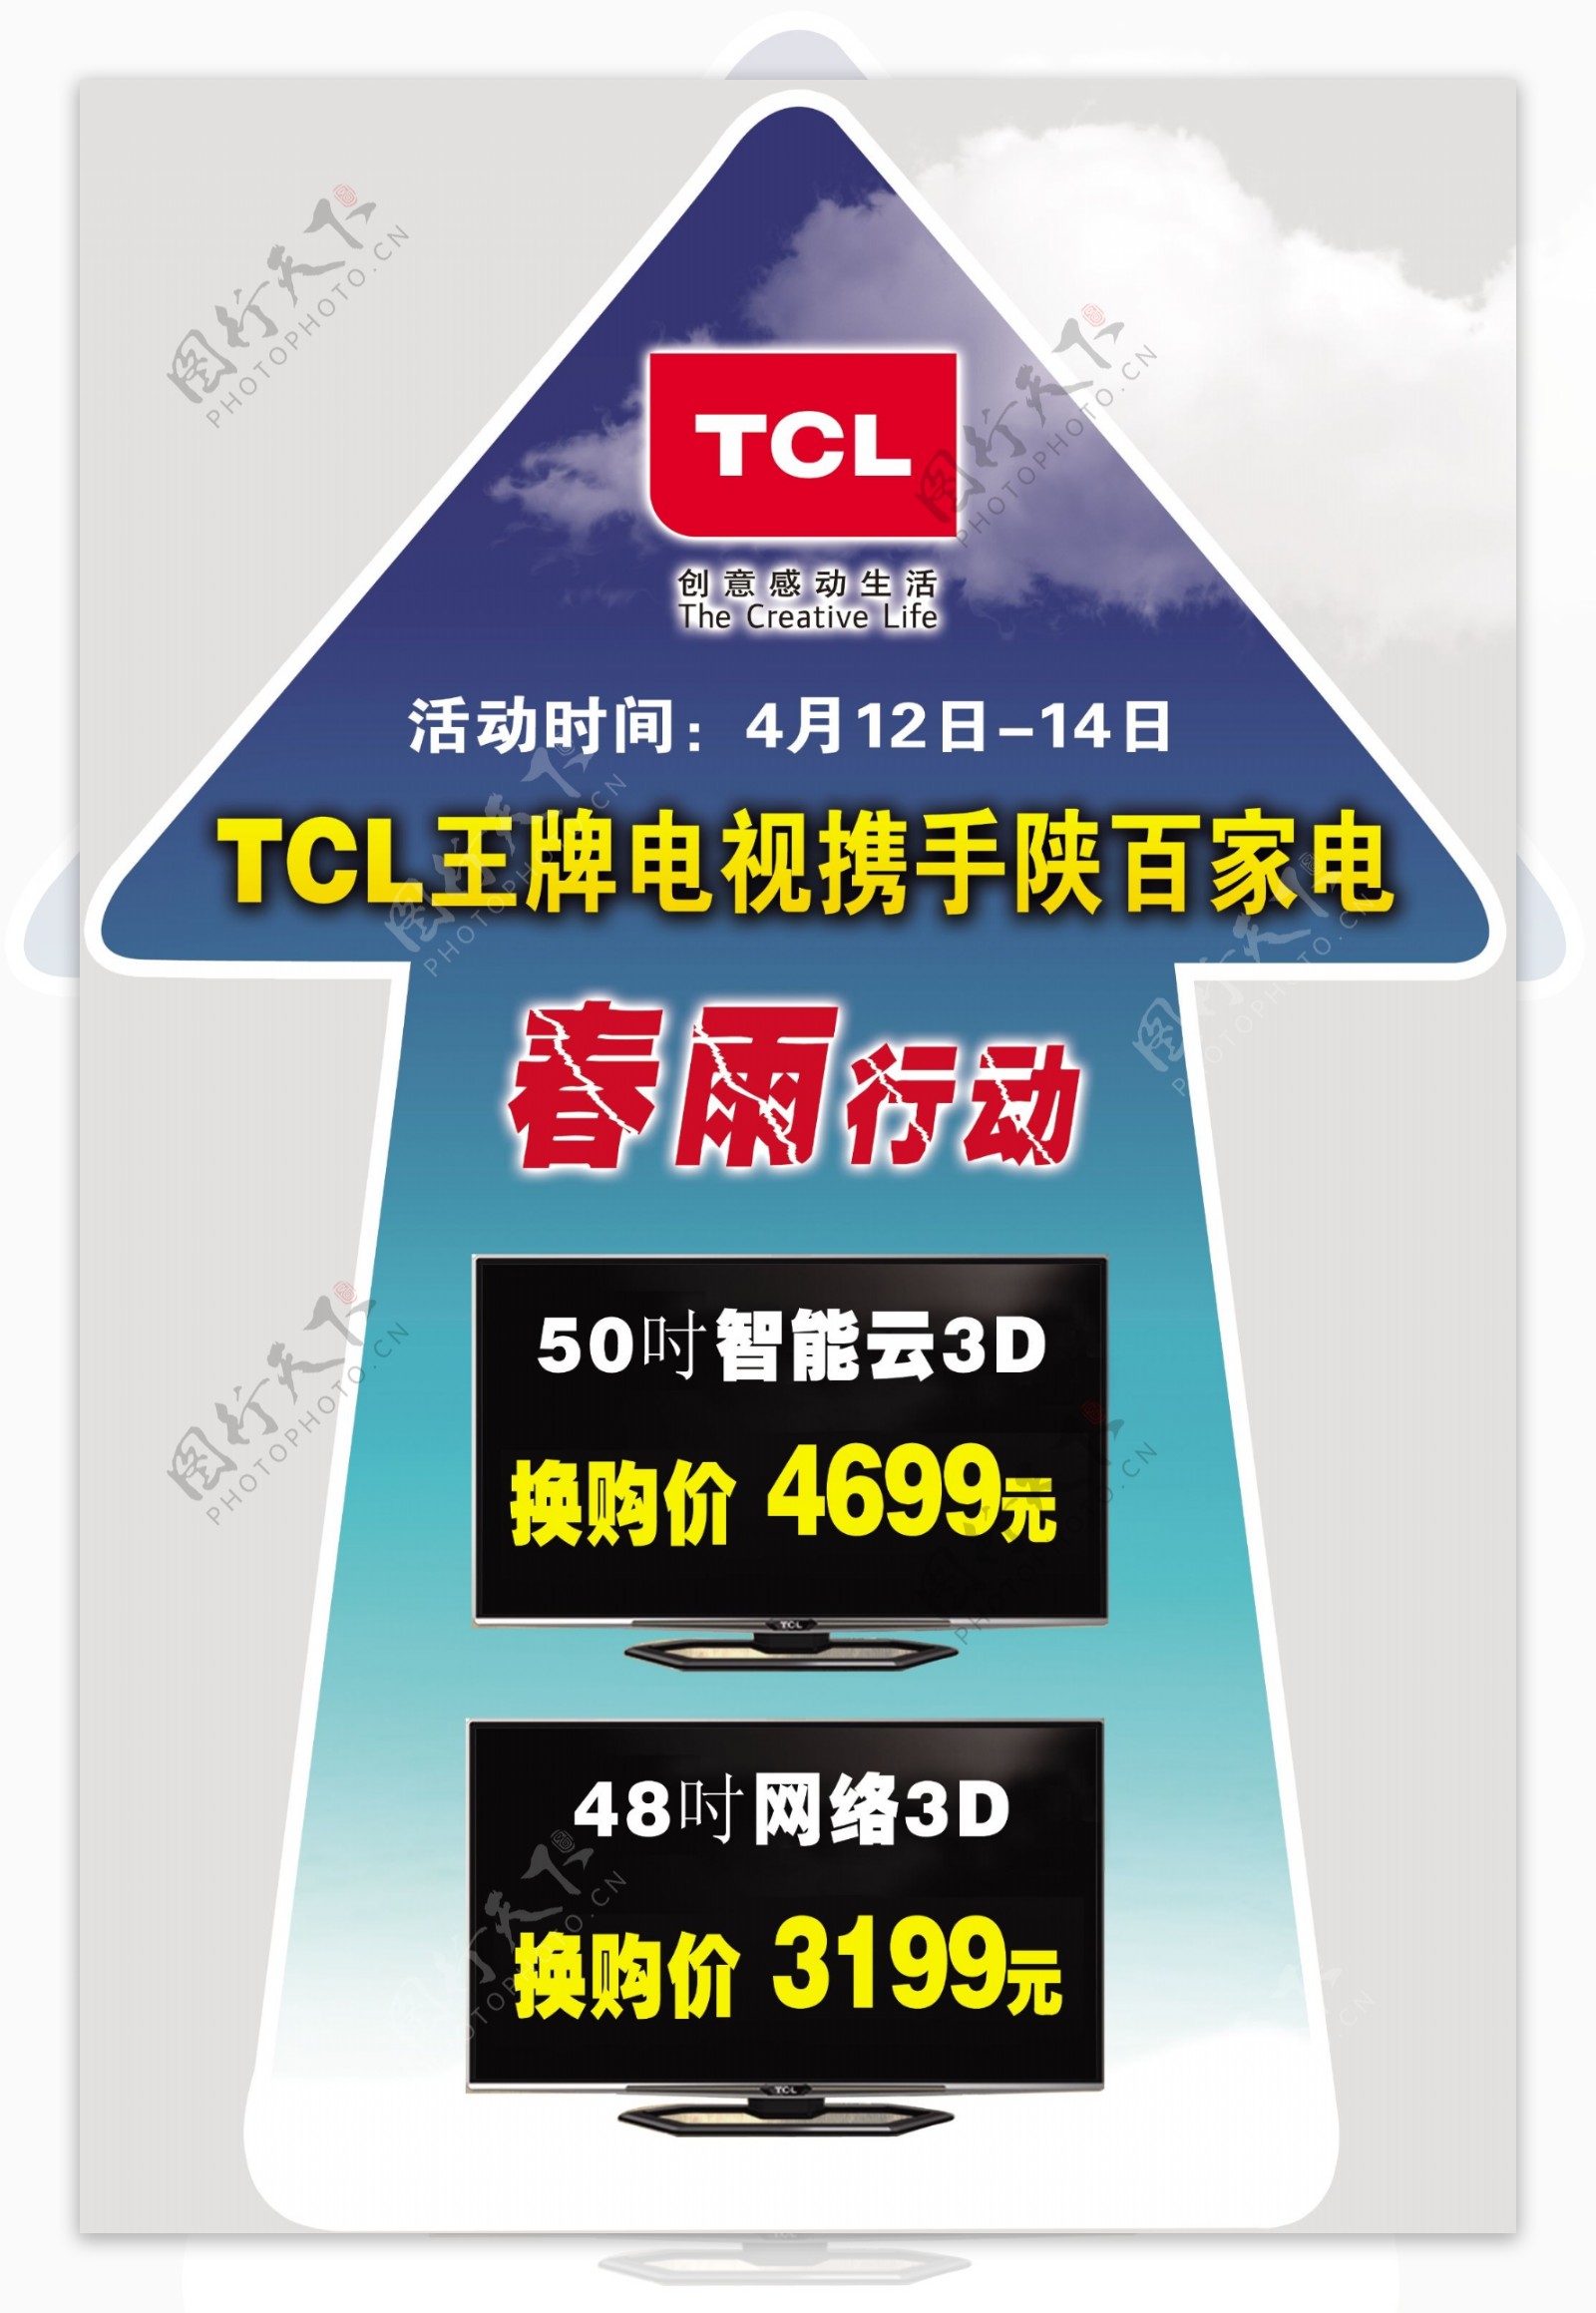 TCL王牌电视指引贴图片